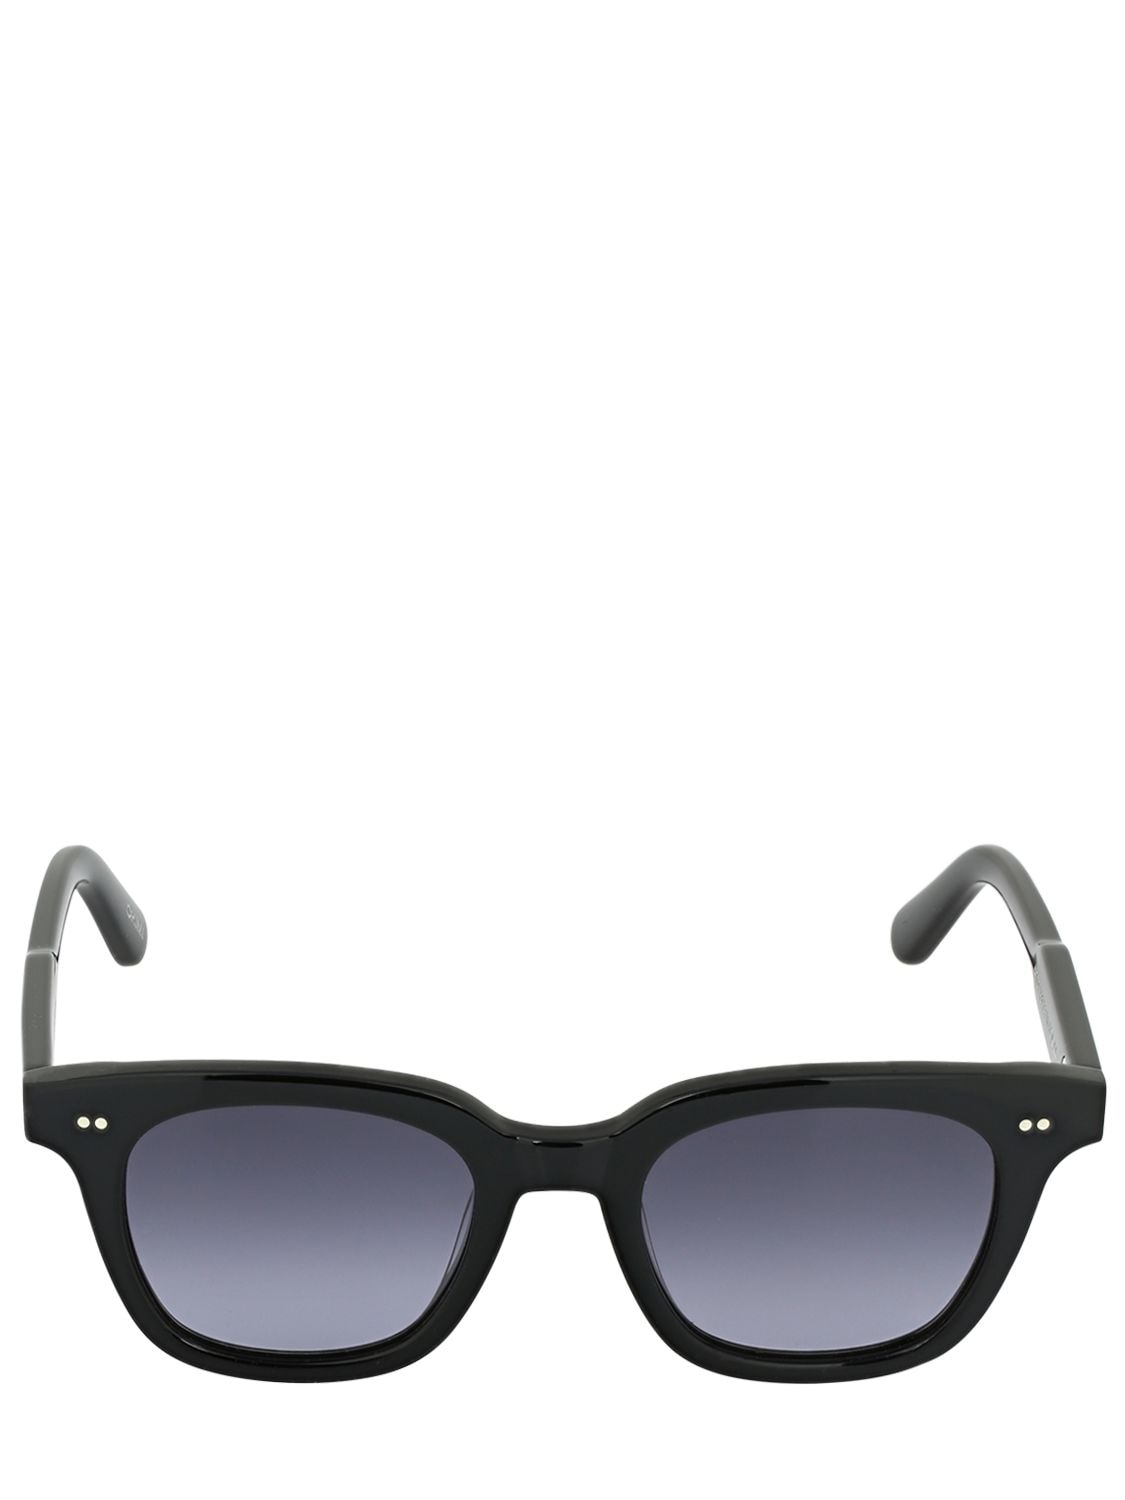 Chimi 101 Black Square Acetate Sunglasses In Black,grey